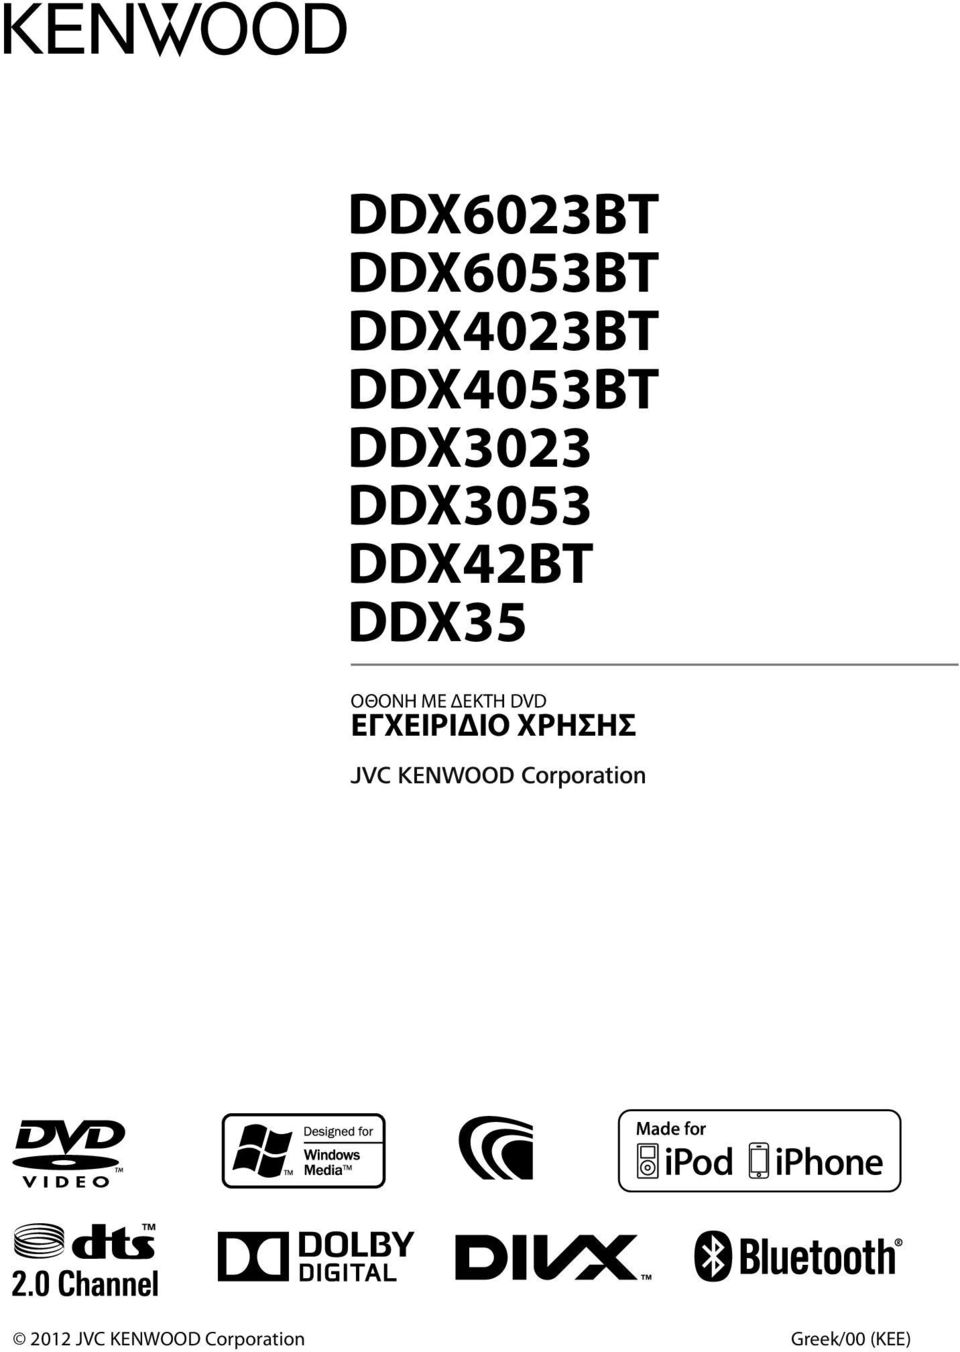 DDX35 ΟΘΟΝΗ ΜΕ ΔΕΚΤΗ DVD ΕΓΧΕΙΡΙΔΙΟ